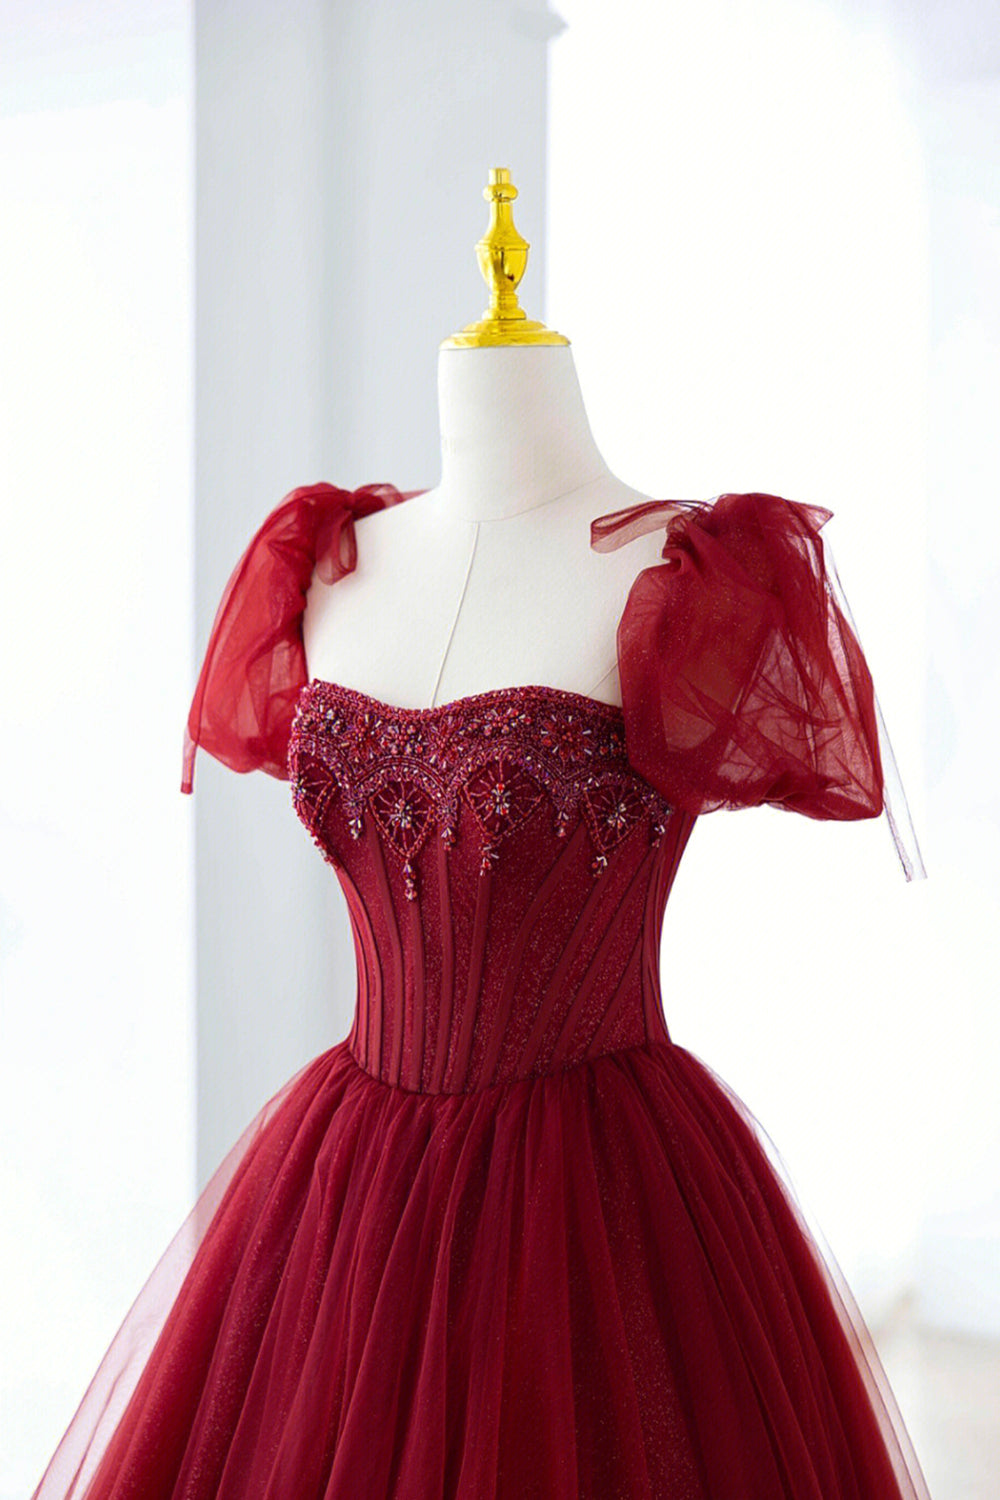 Burgundy Tulle Beaded Long Prom Dress, A-Line Short Sleeve Evening Dress